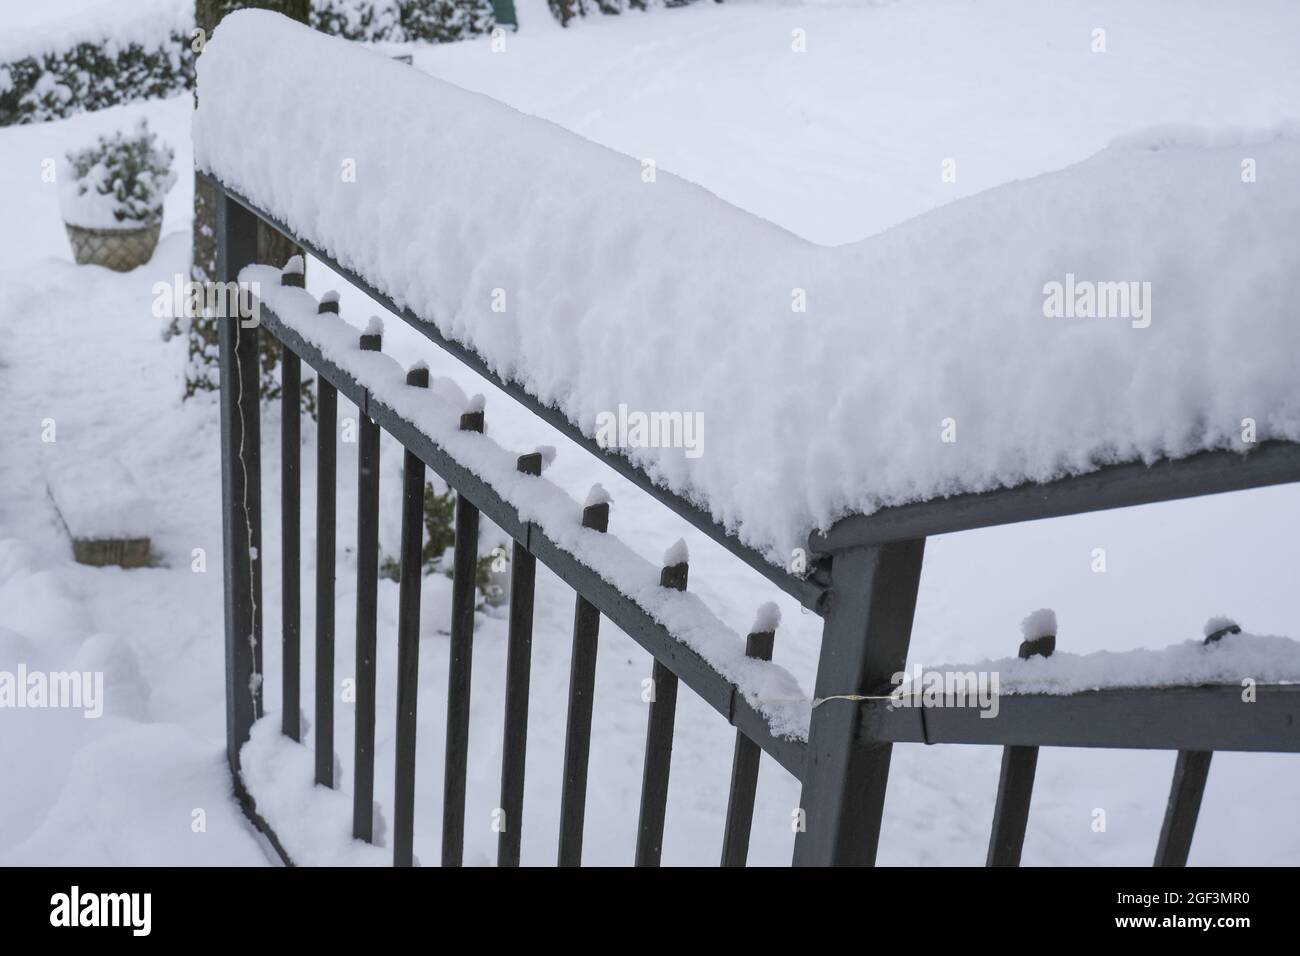 snow covered black metal handrail by the house across snowy backyard. Winter season Stock Photo